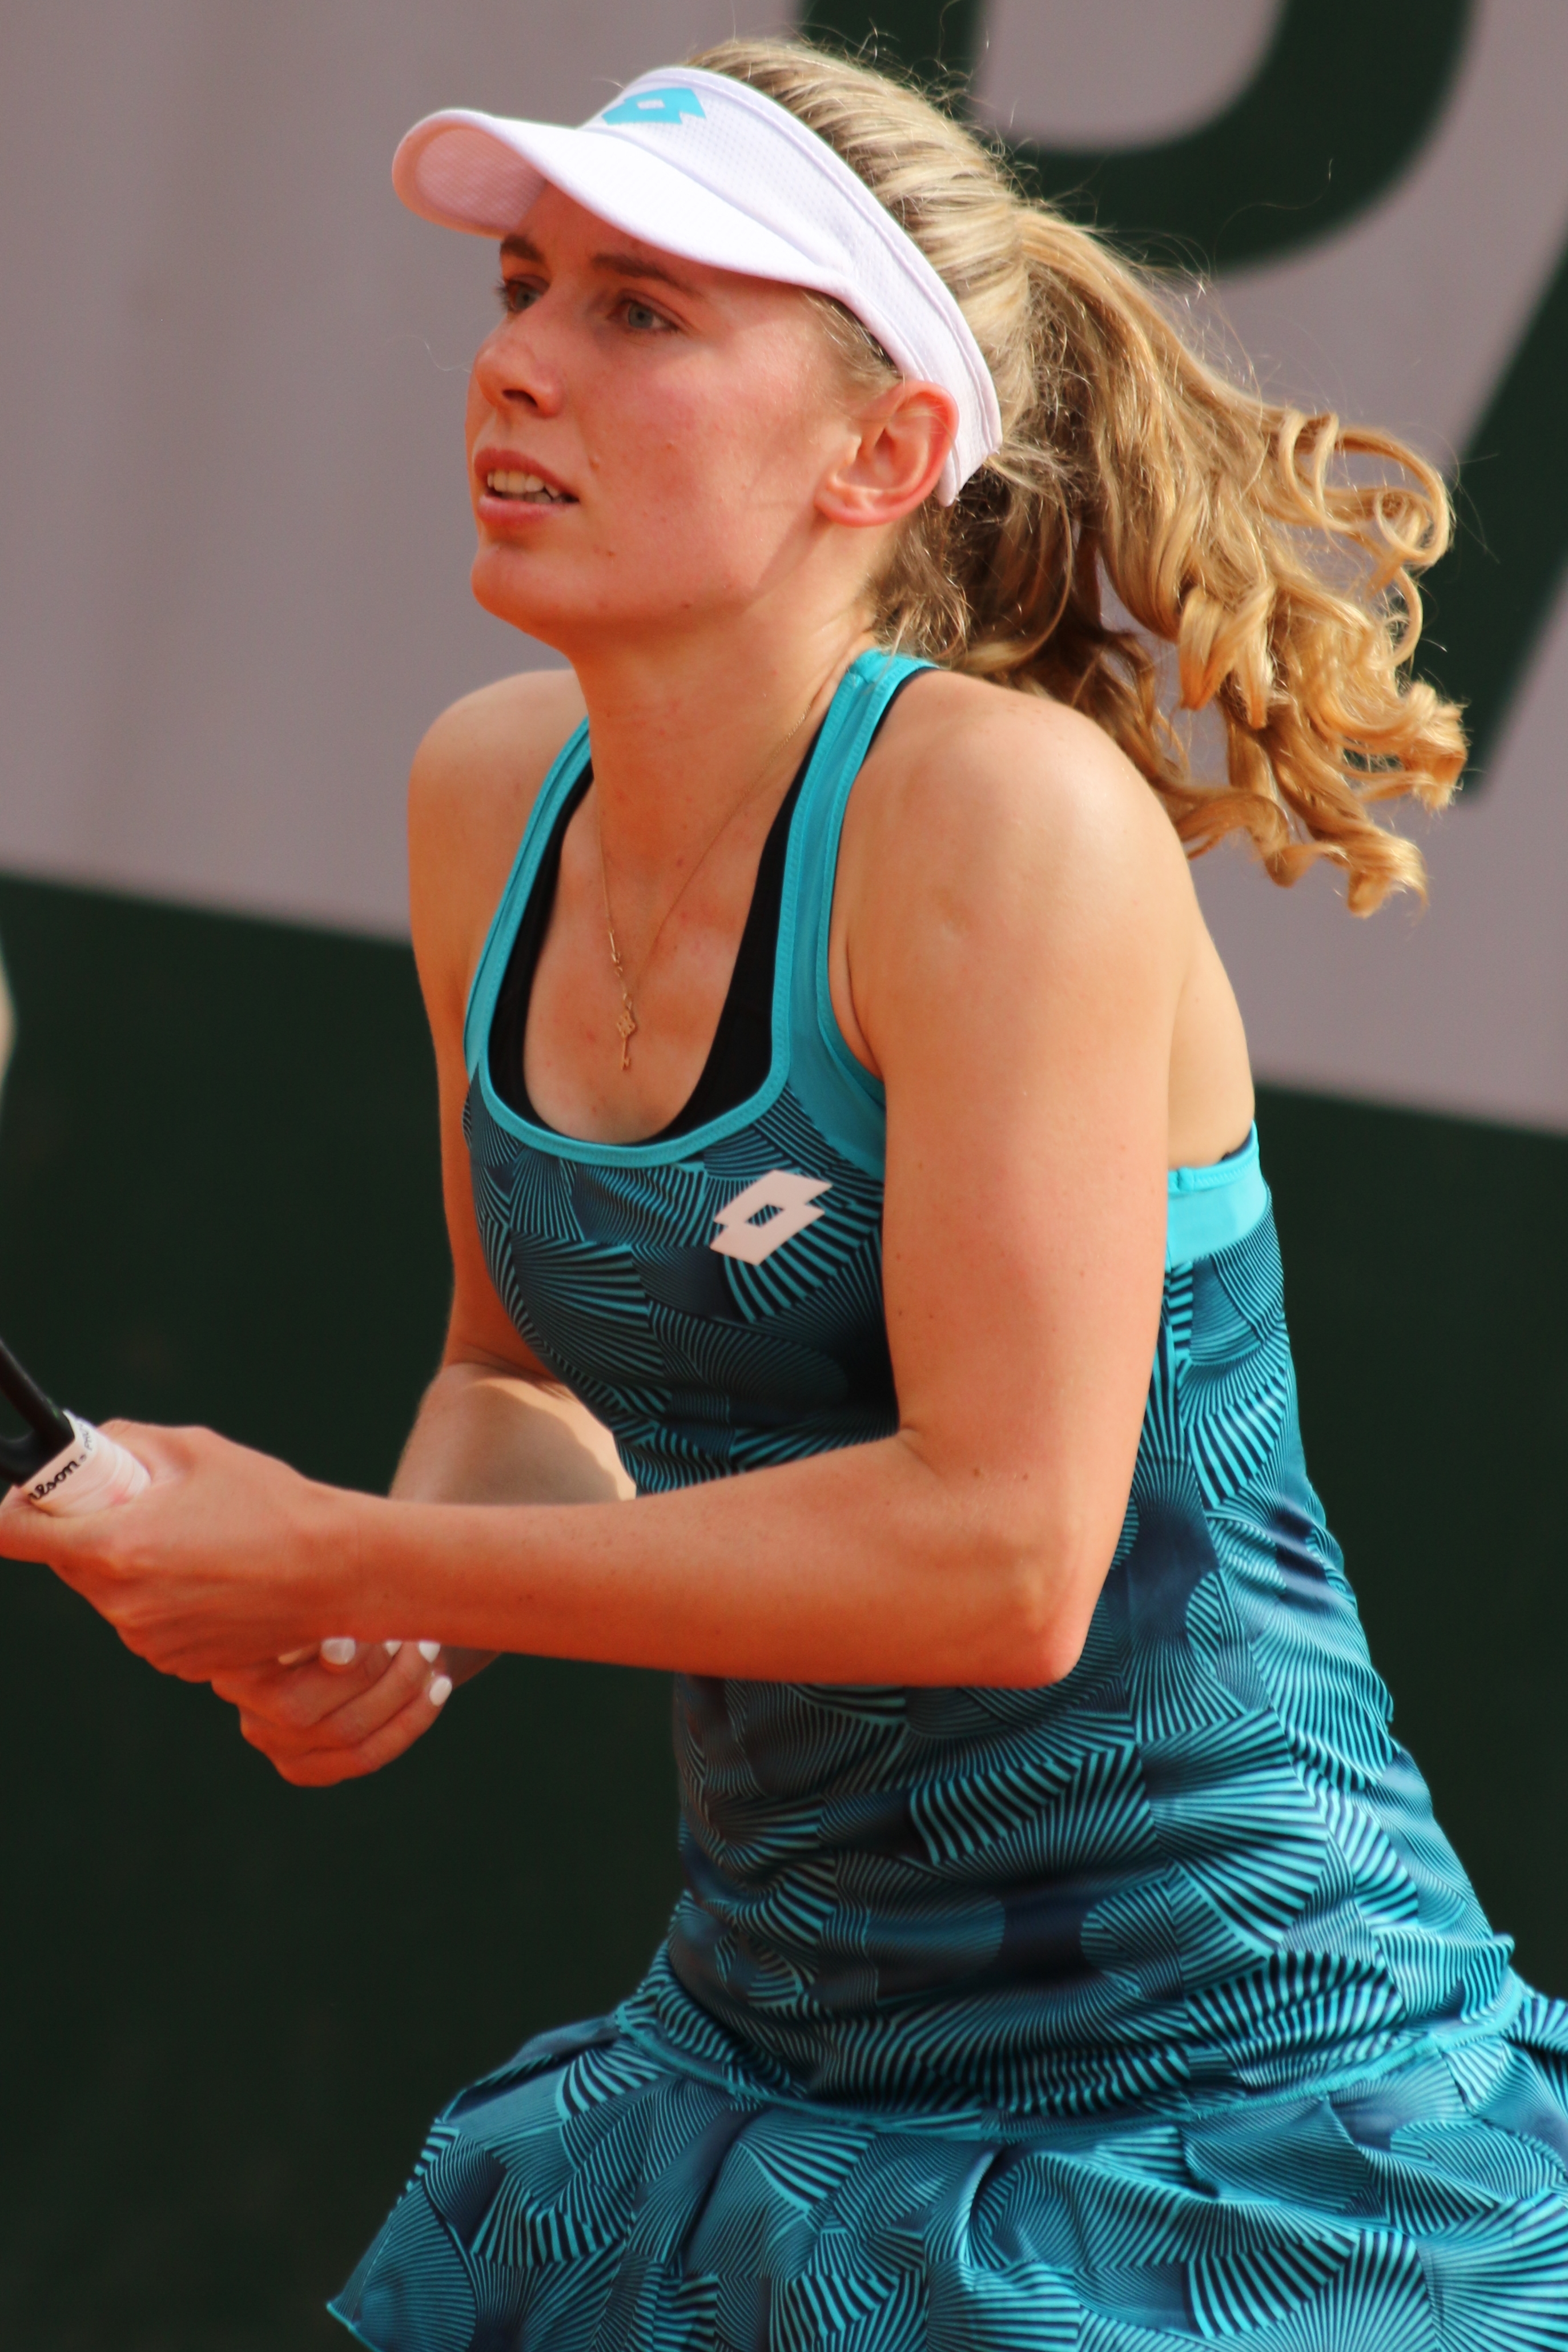 Alexandrova halts Muchova comeback in Stuttgart opener: Highlights